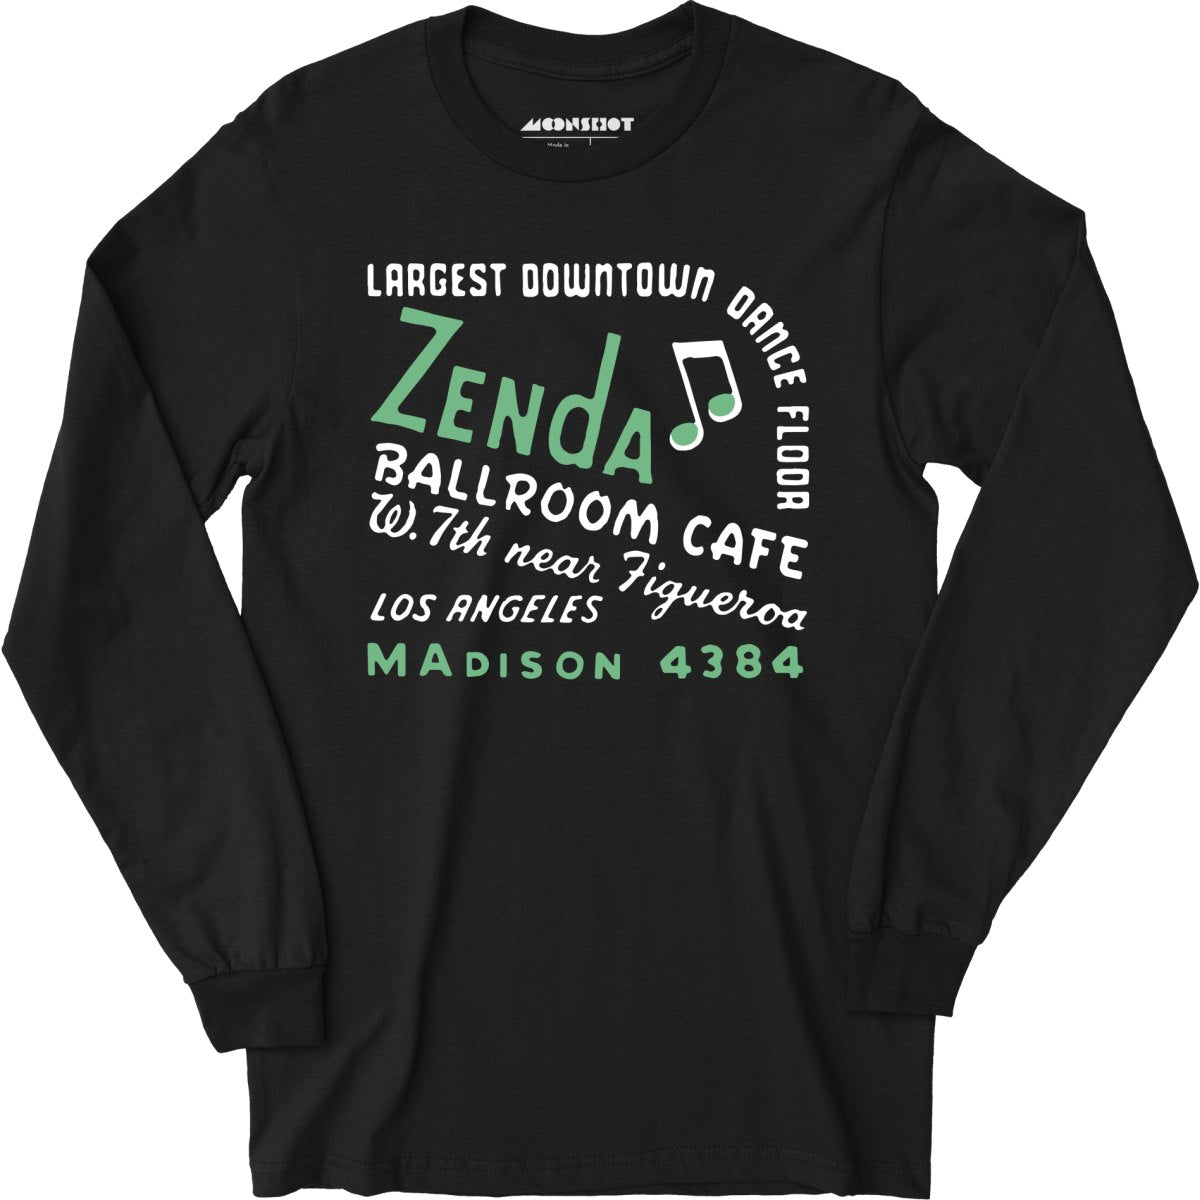 Zenda Ballroom Cafe - Los Angeles, CA - Vintage Nightclub - Long Sleeve T-Shirt